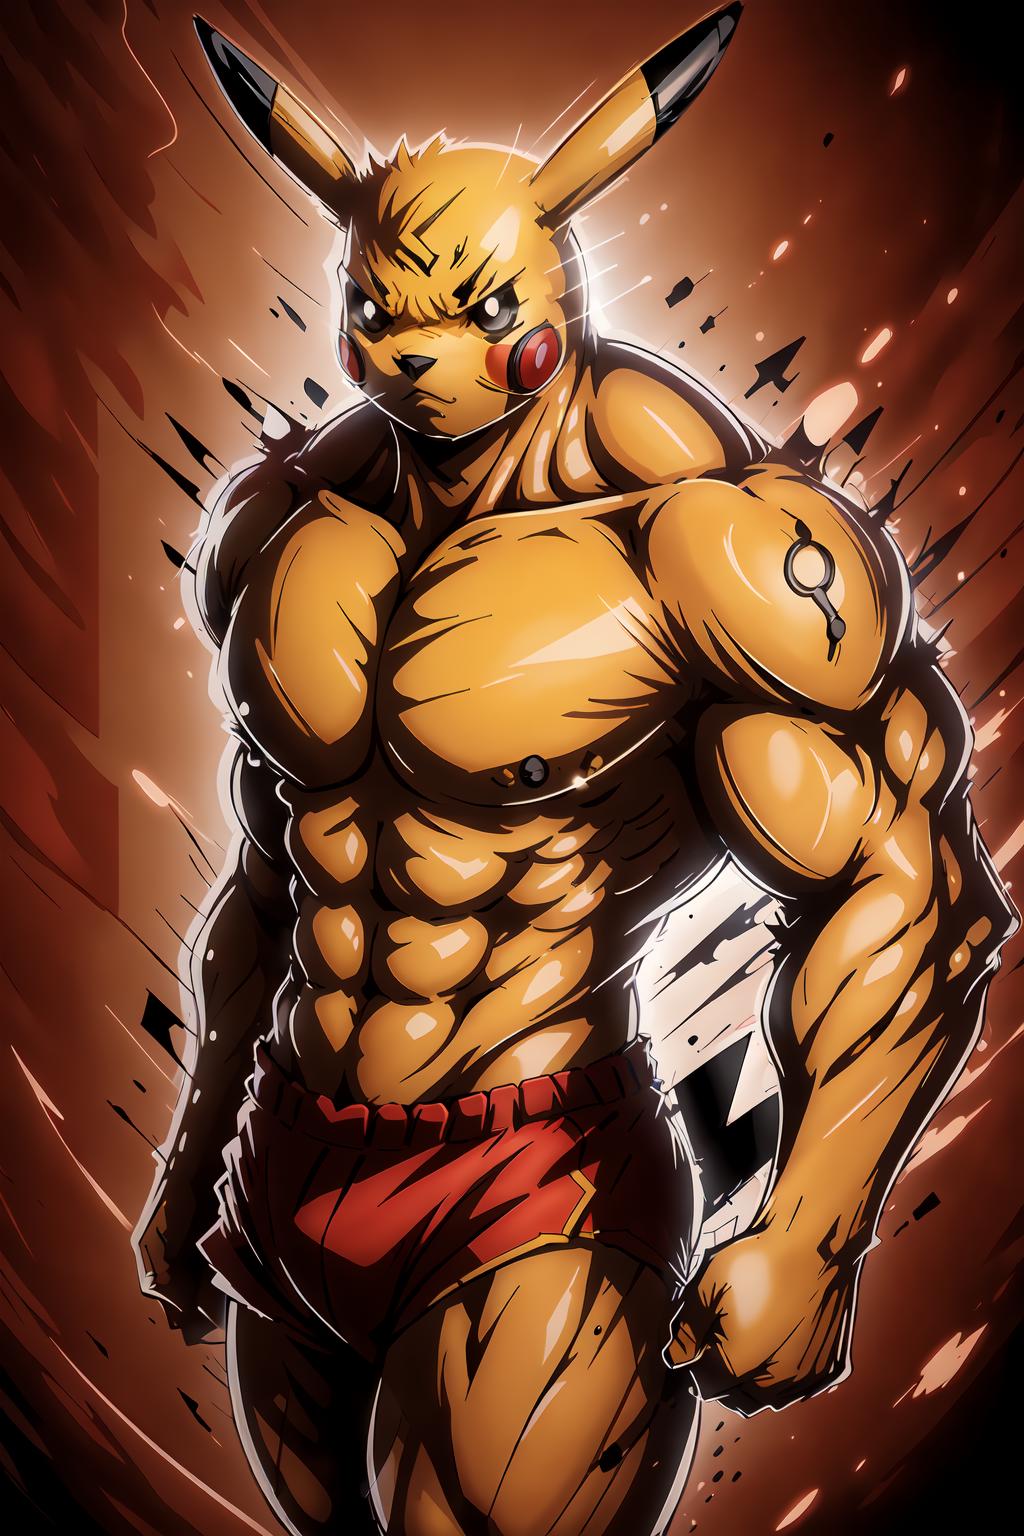 A Muscular Cartoon Character with a Pikachu Head